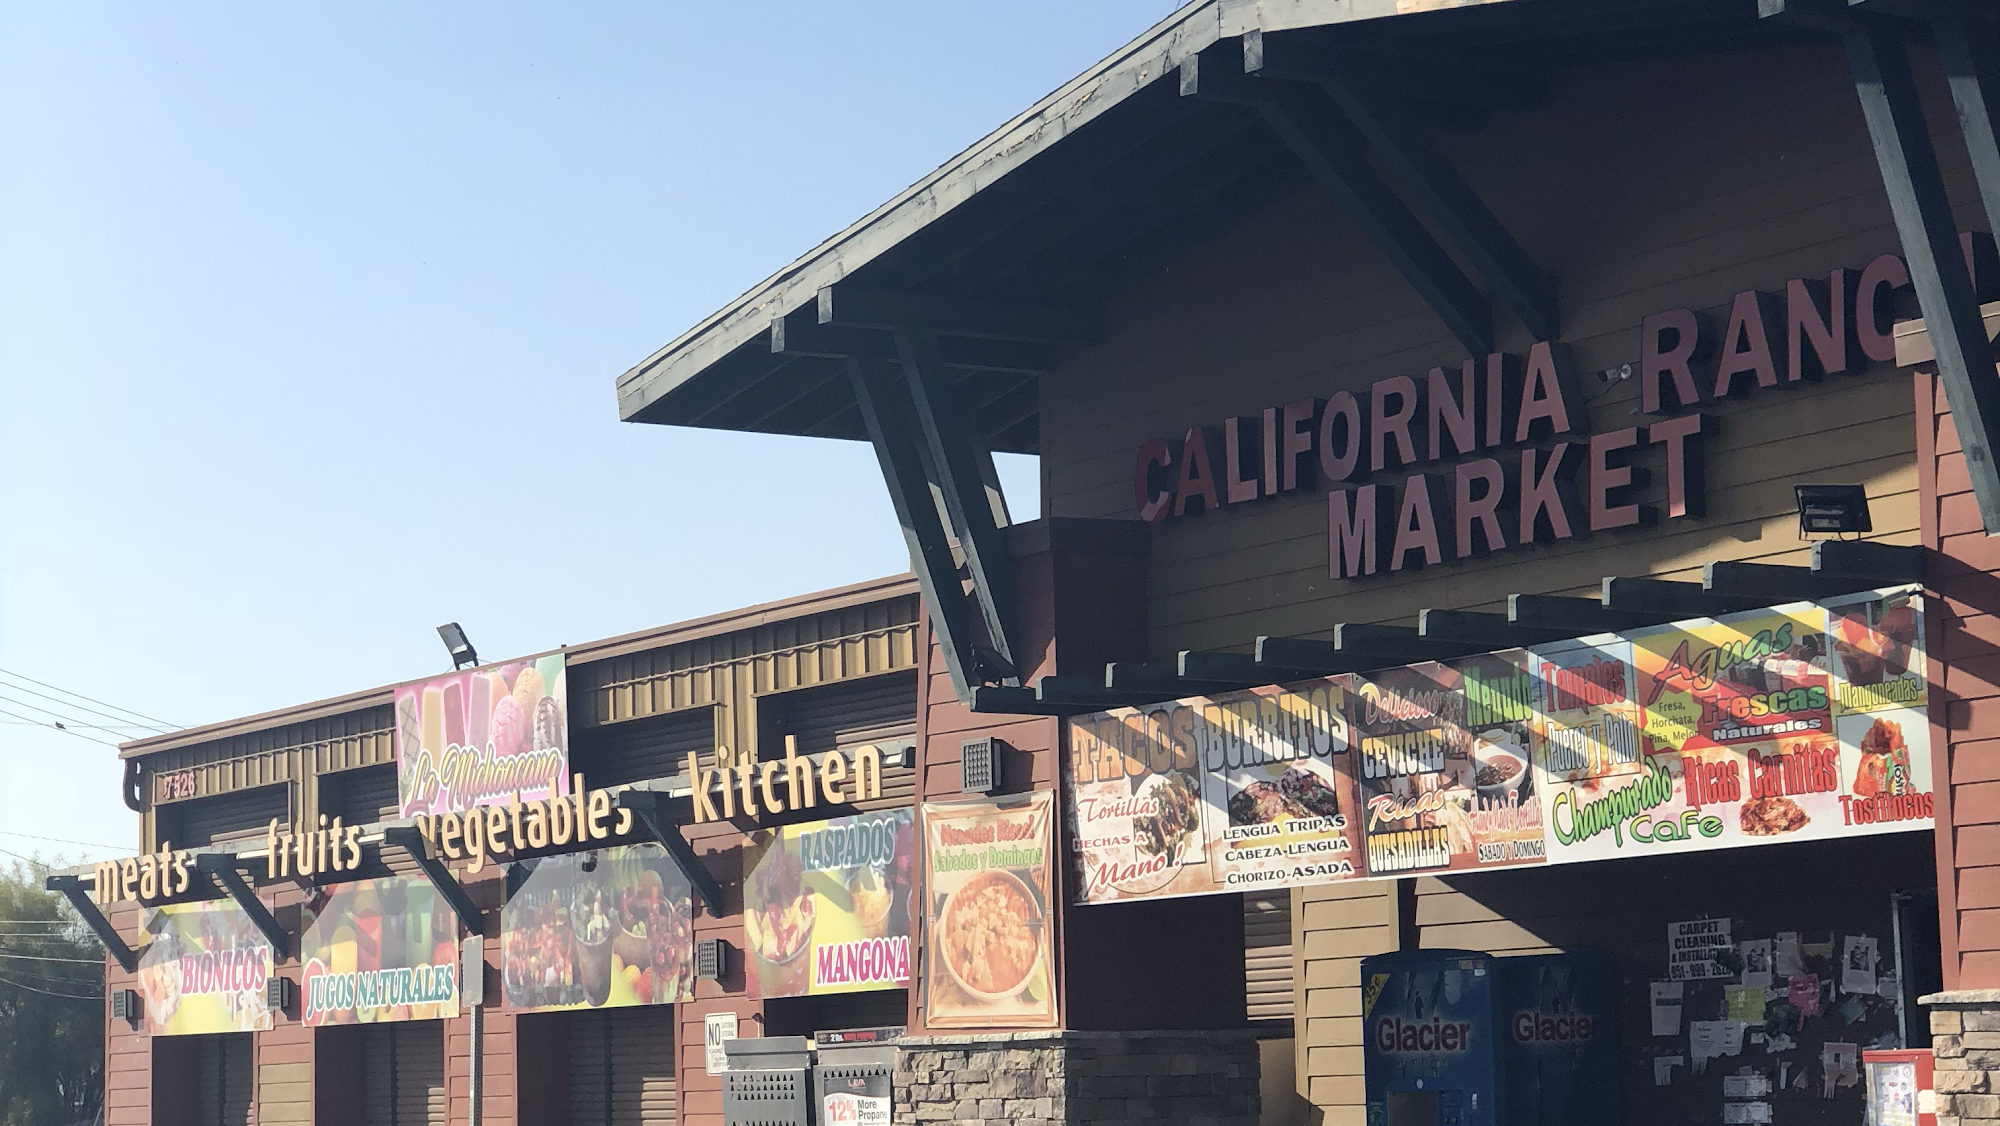 California Ranch Market